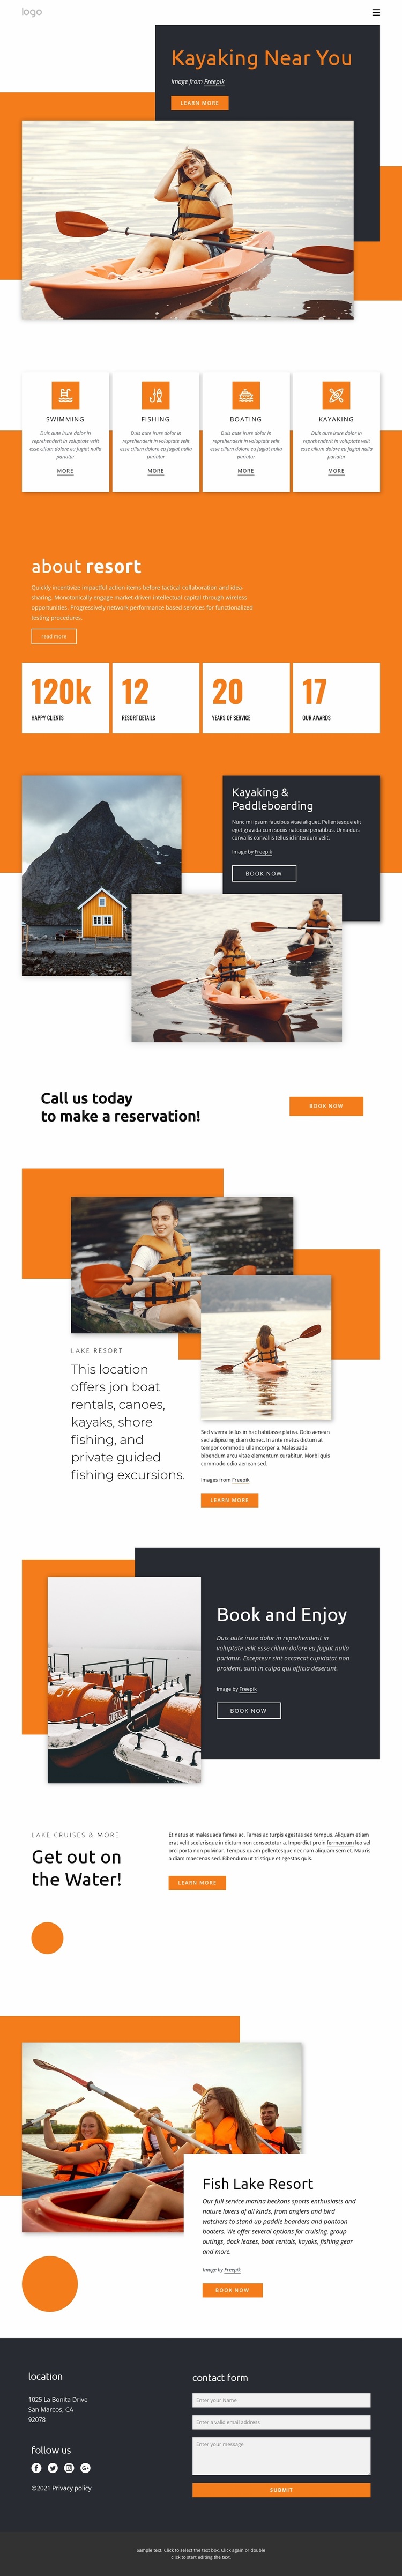 Canoeing and kayaking Website Design